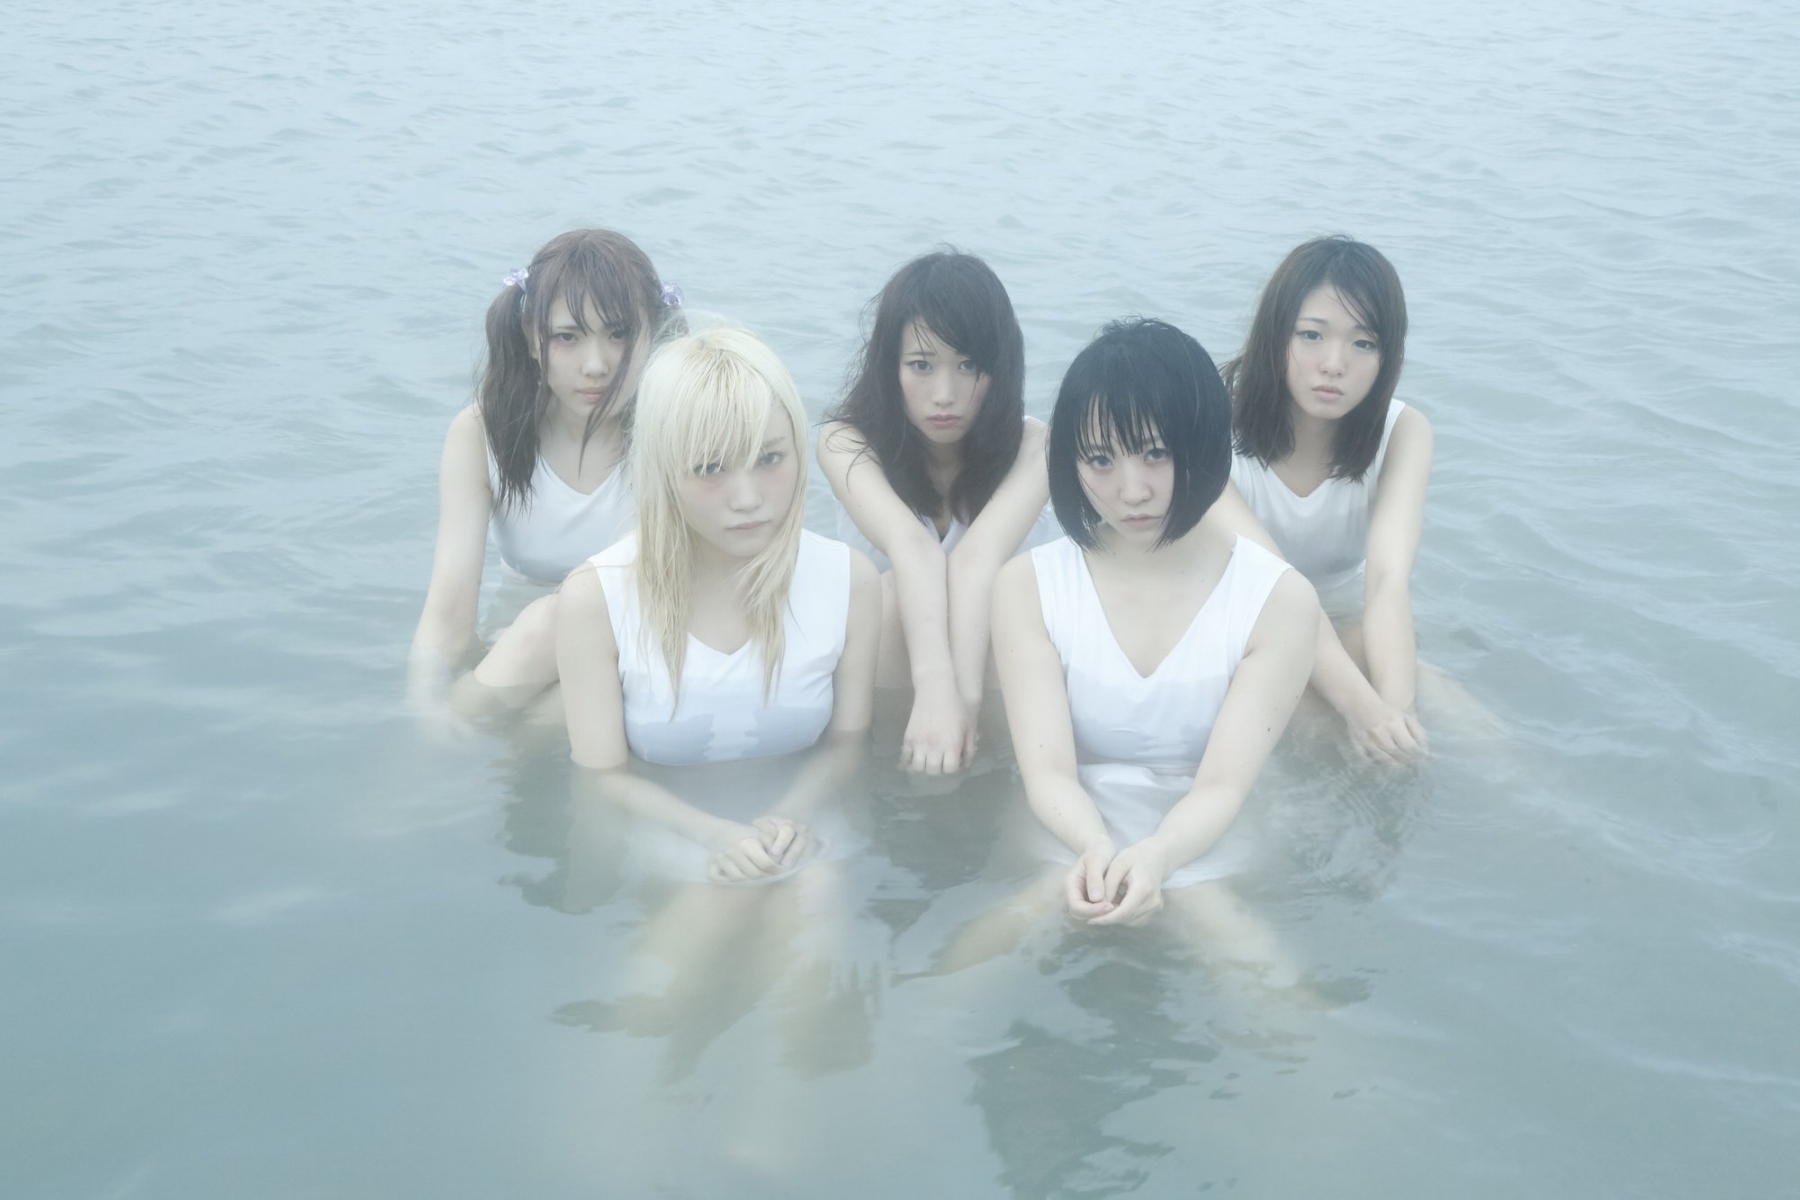 Chaotic Yami-Kawaii IDOL Sound!  “Zenbu Kimi no Sei da” will Drop the 2nd Single “ShitEnd Placebo”